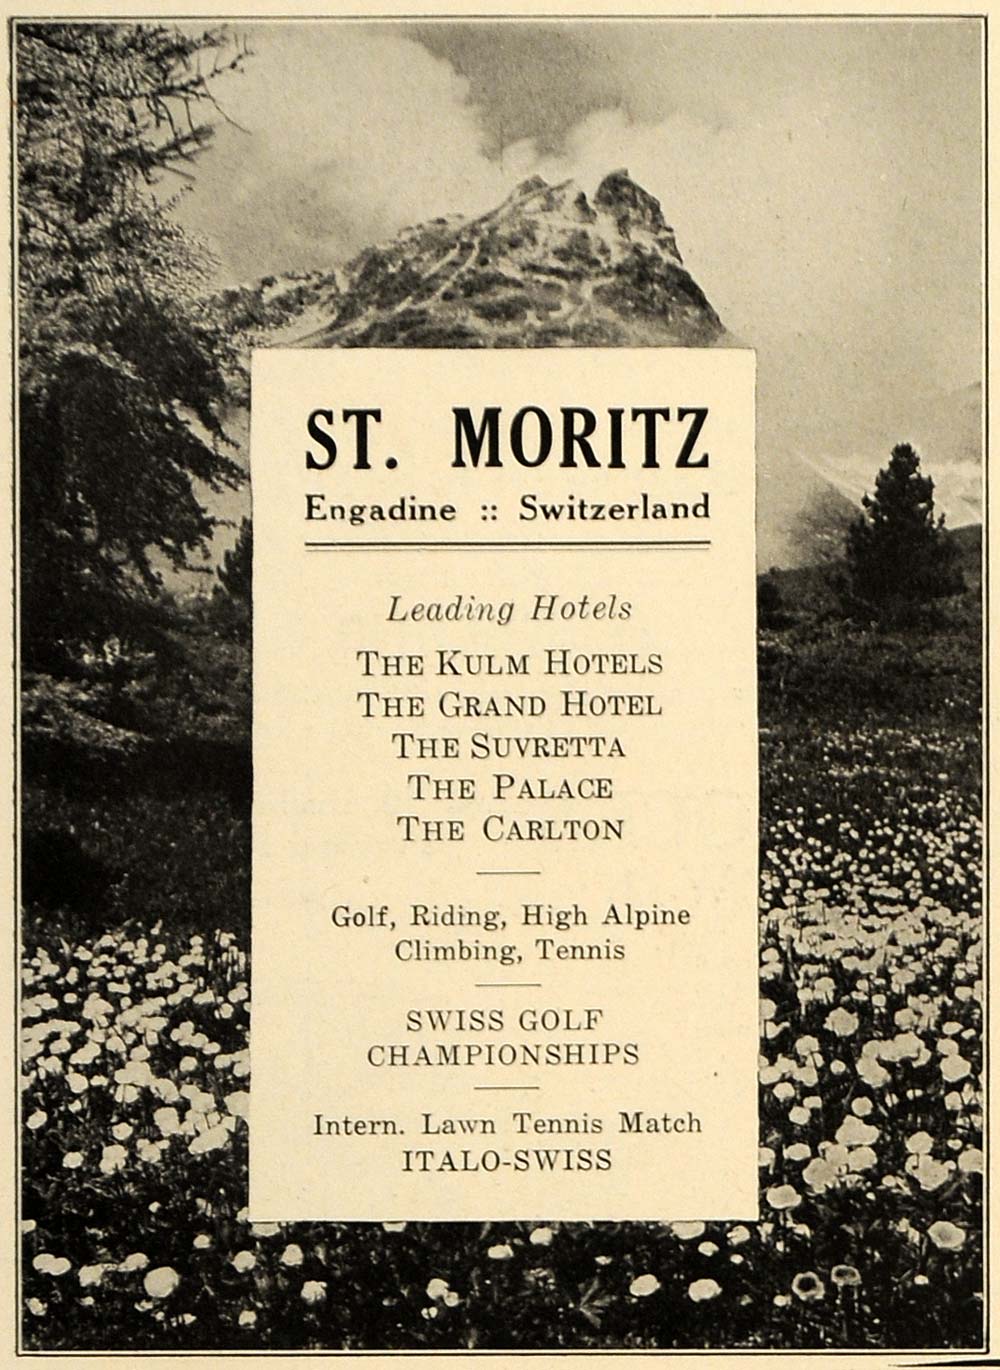 1923 Ad St. Moritz Engadine Switzerland Travel Hotels - ORIGINAL TRV1